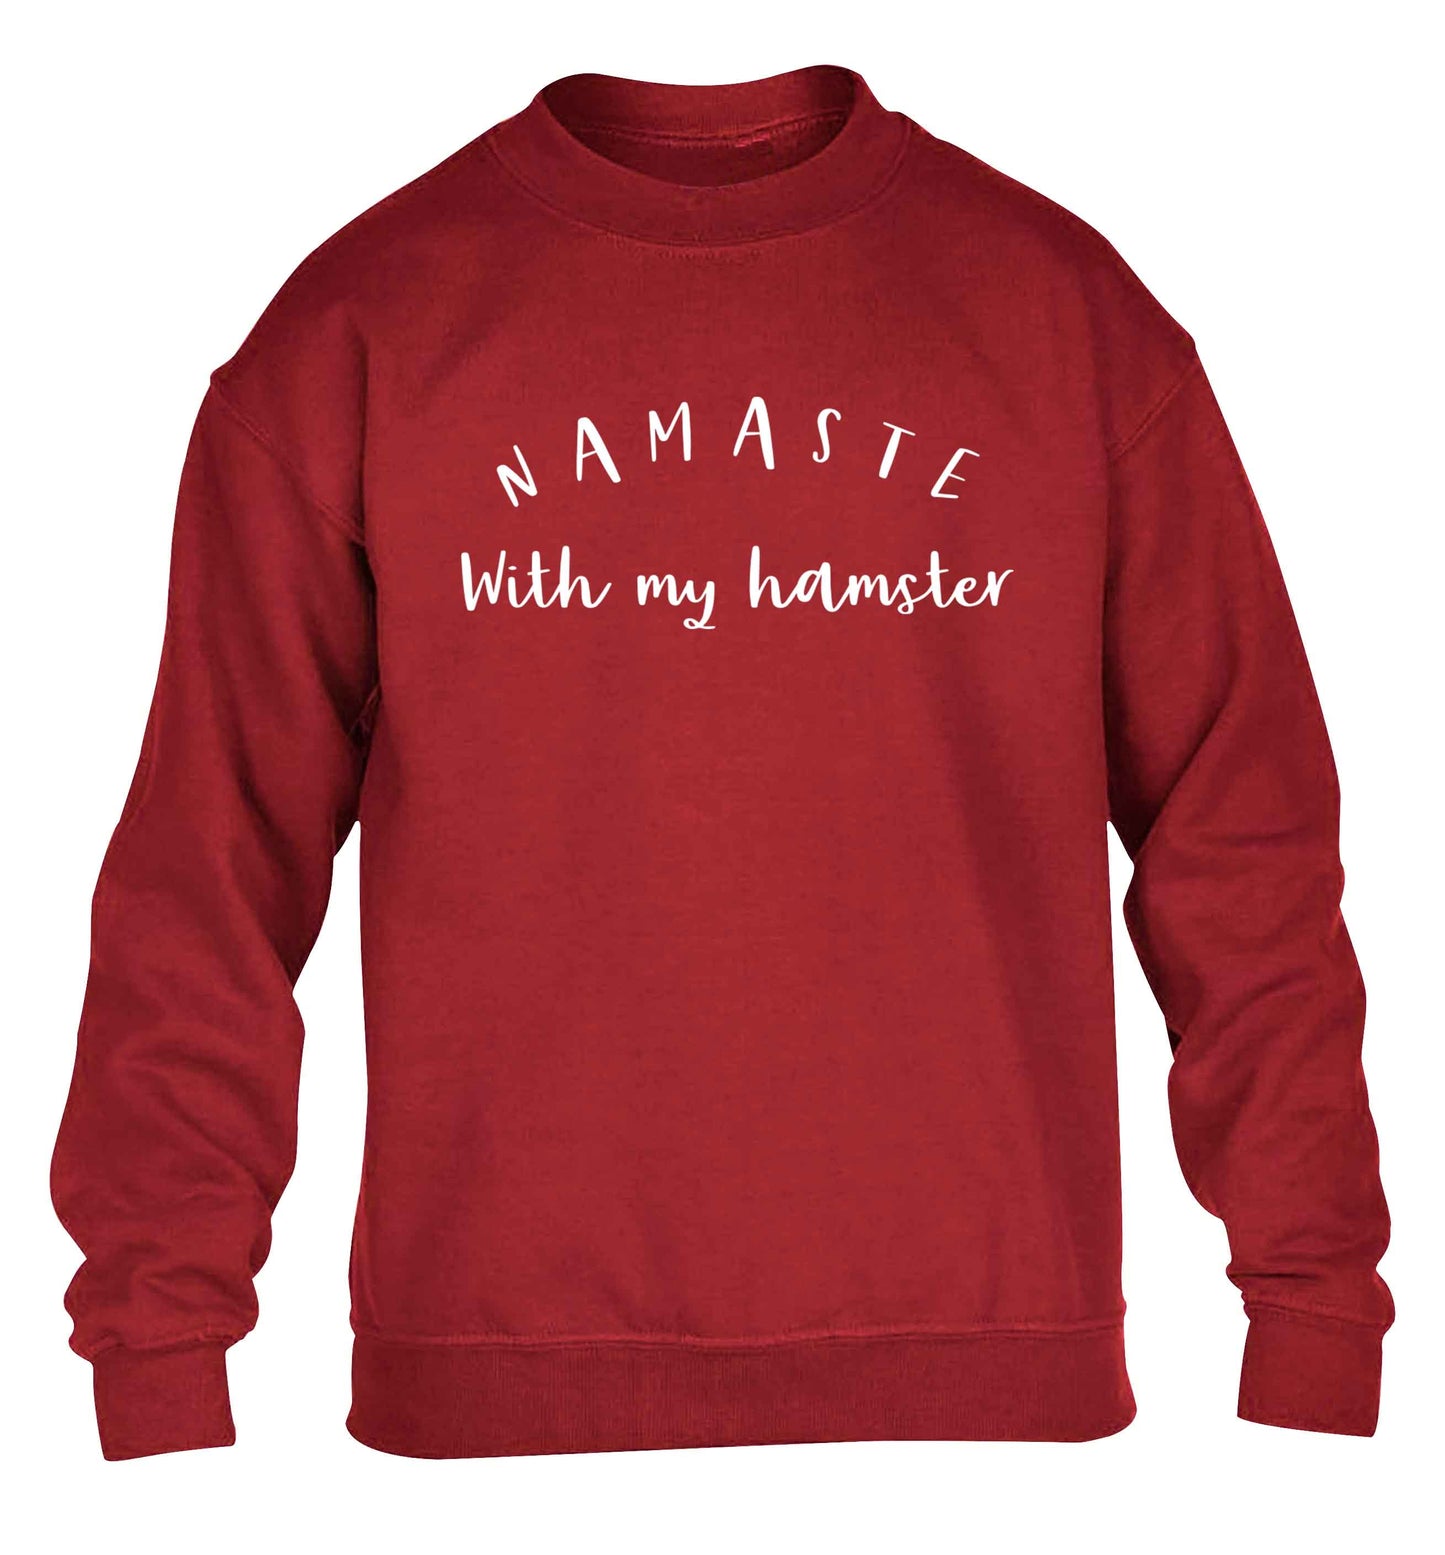 Namaste with my hamster children's grey sweater 12-13 Years